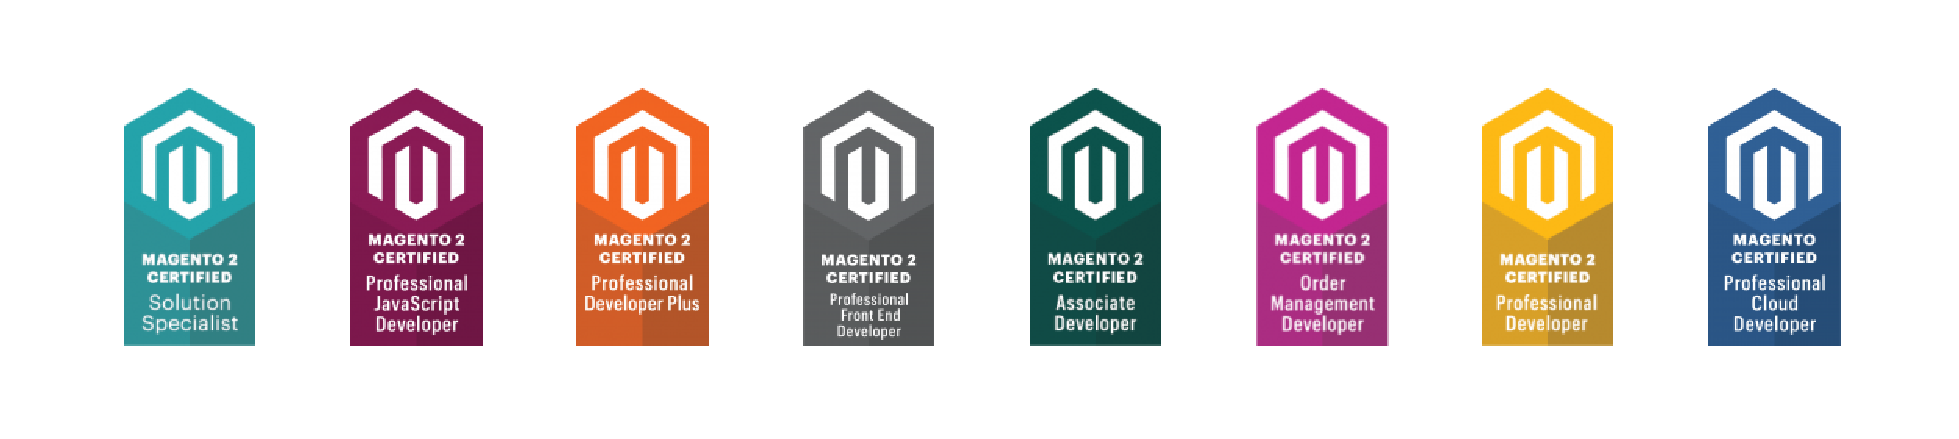 Certified-Magento-Developers-Certificate